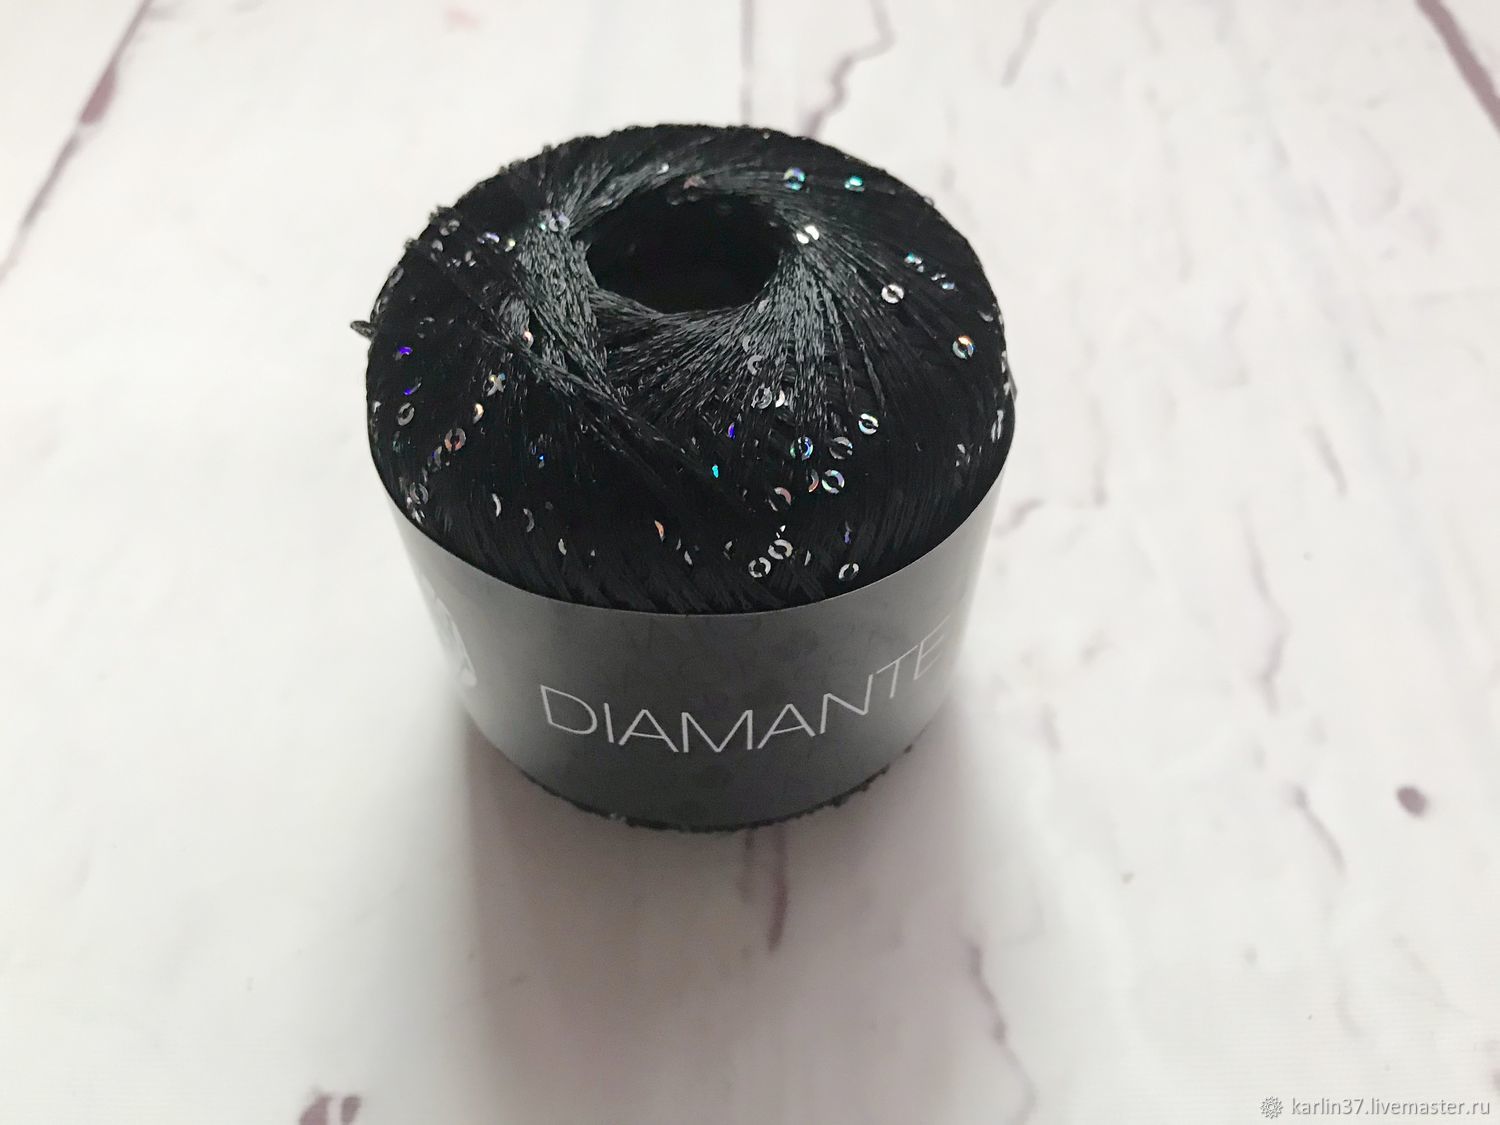 Lana Diamant